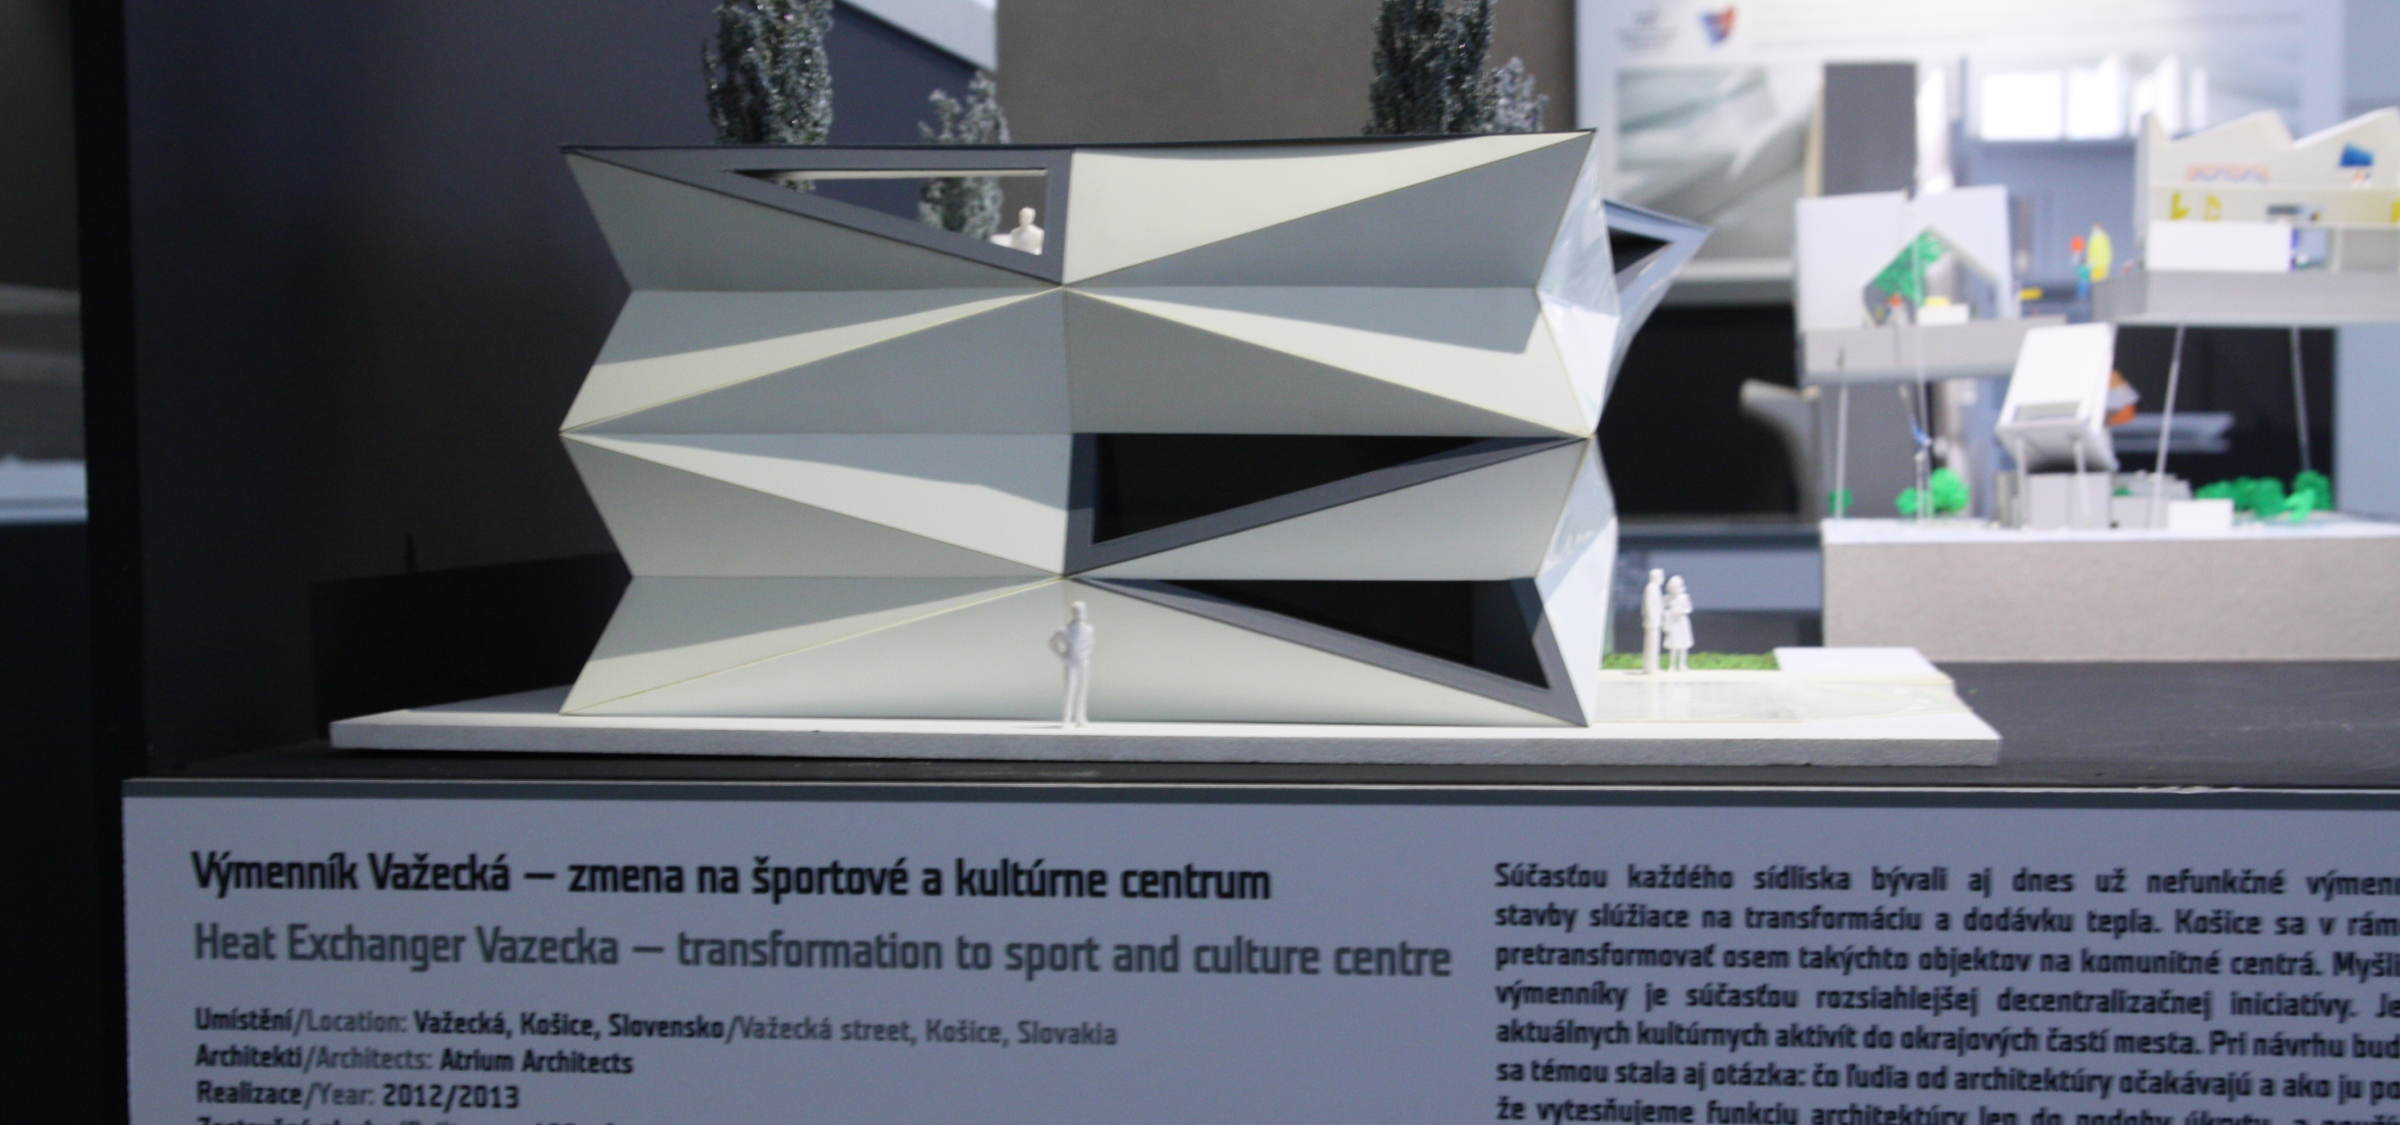 Atrium na Architecture Week Praha 2015 | Aktuálne | Atrium Architekti